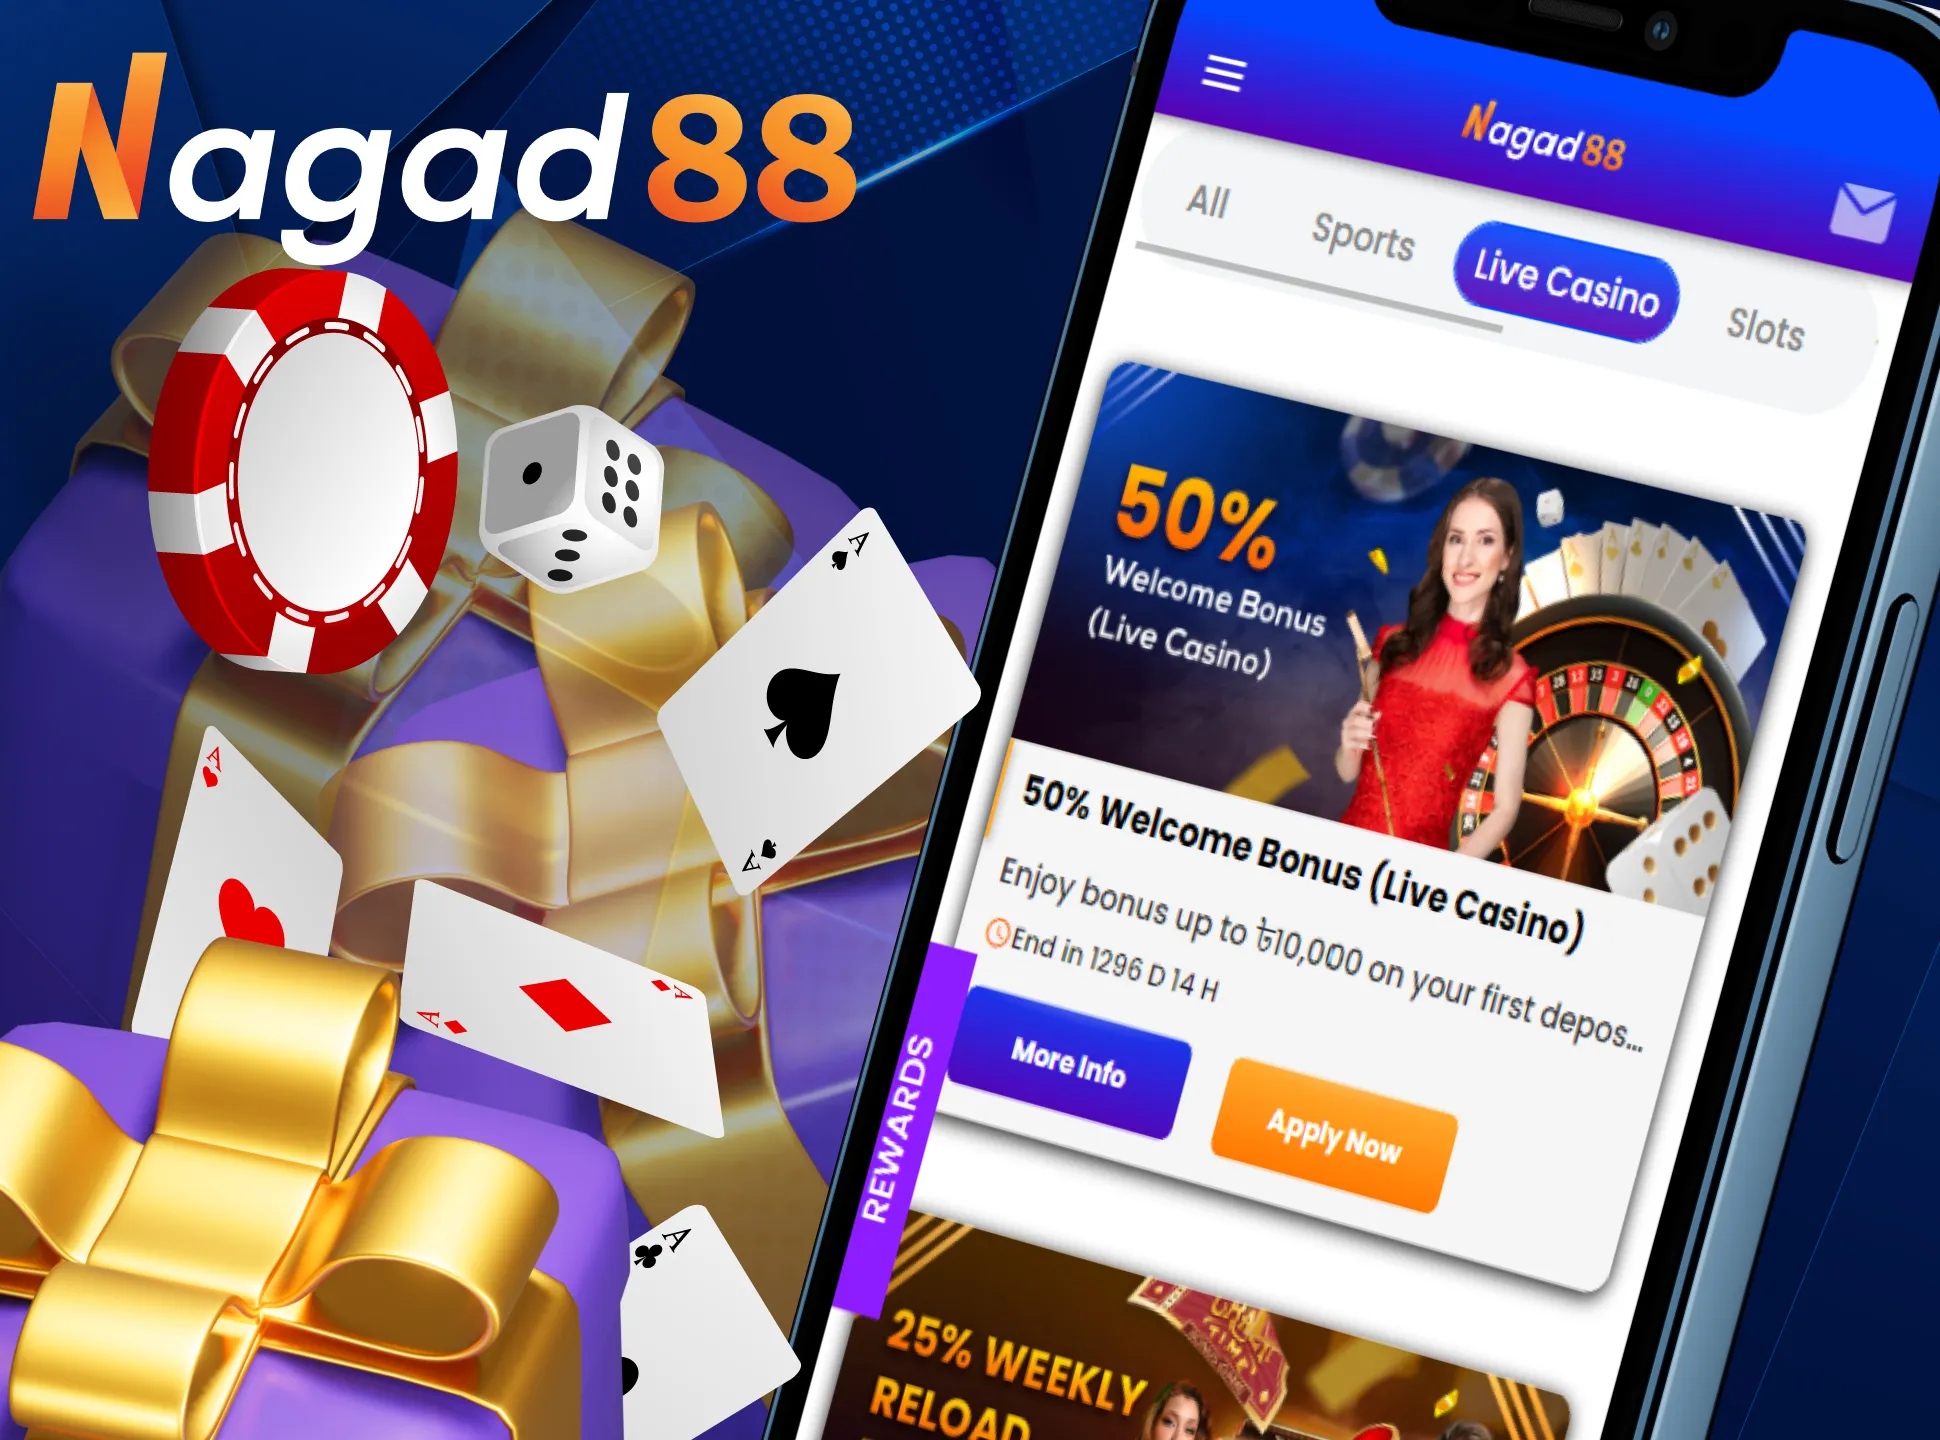 In the Nagad88 app try the live casino bonus.